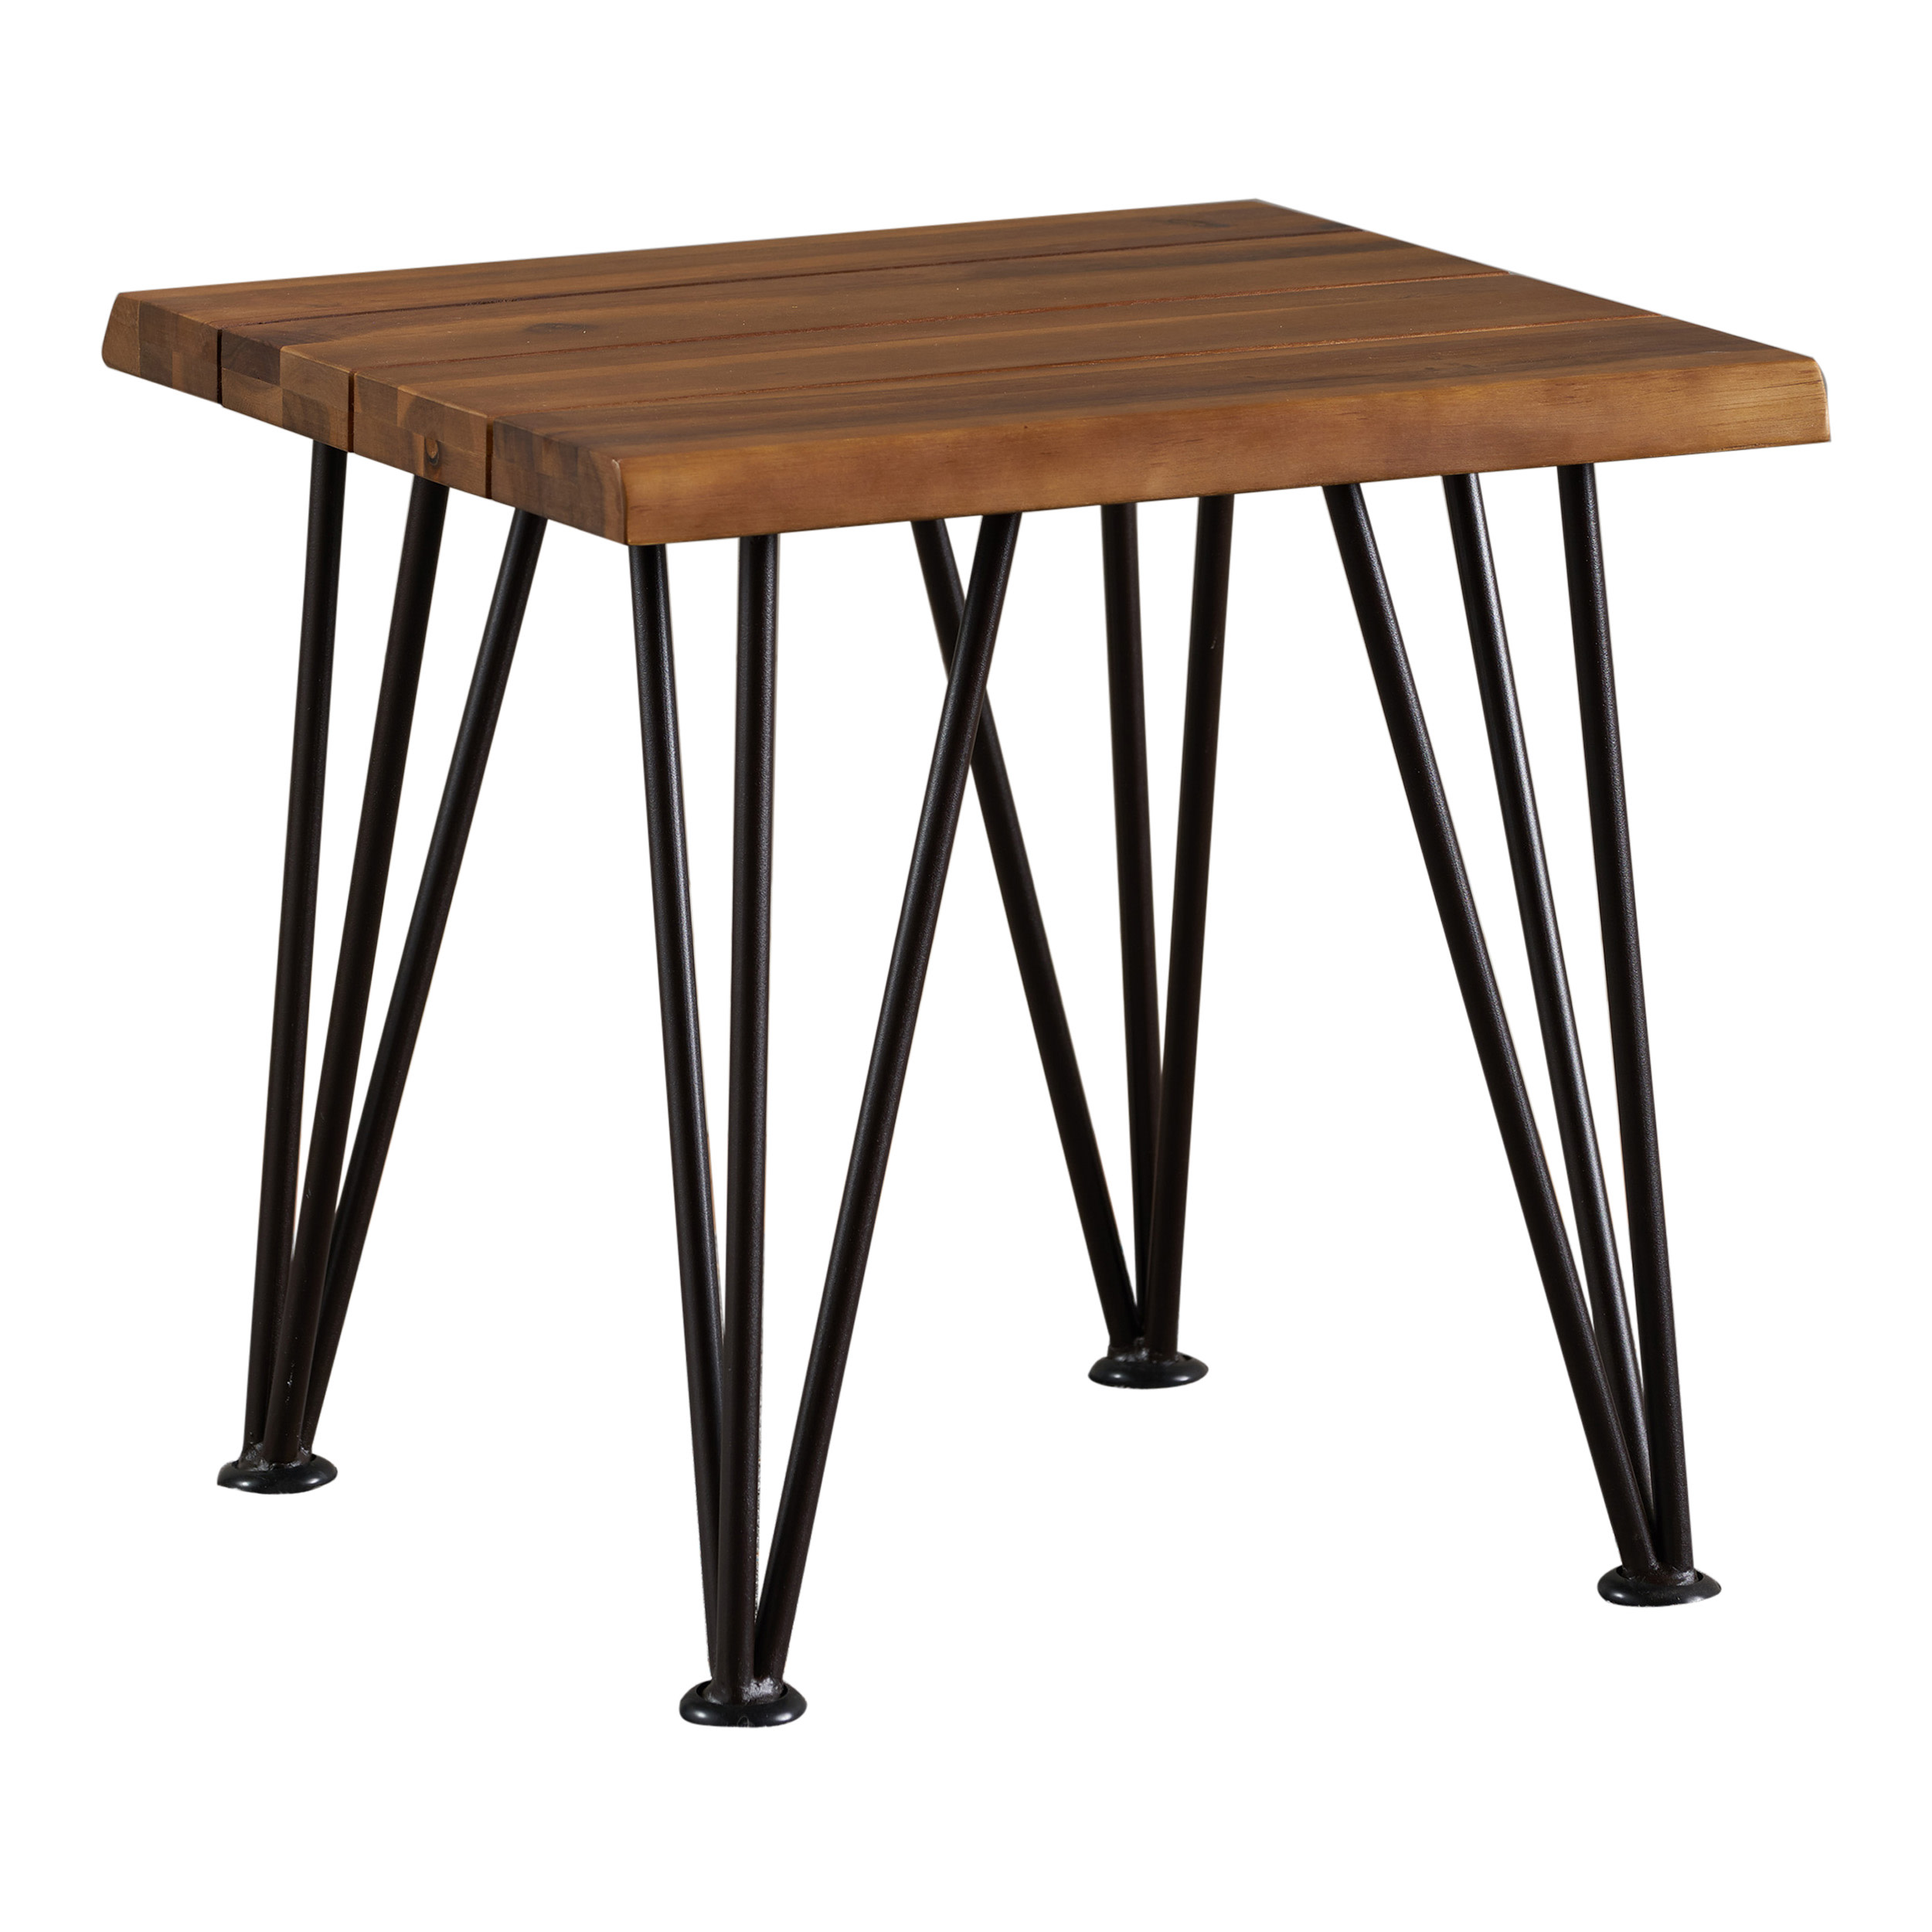 GDF Studio Avy Indoor/Outdoor Modern Industrial Acacia Wood Side Table, Teak and Rustic Metal - image 1 of 7